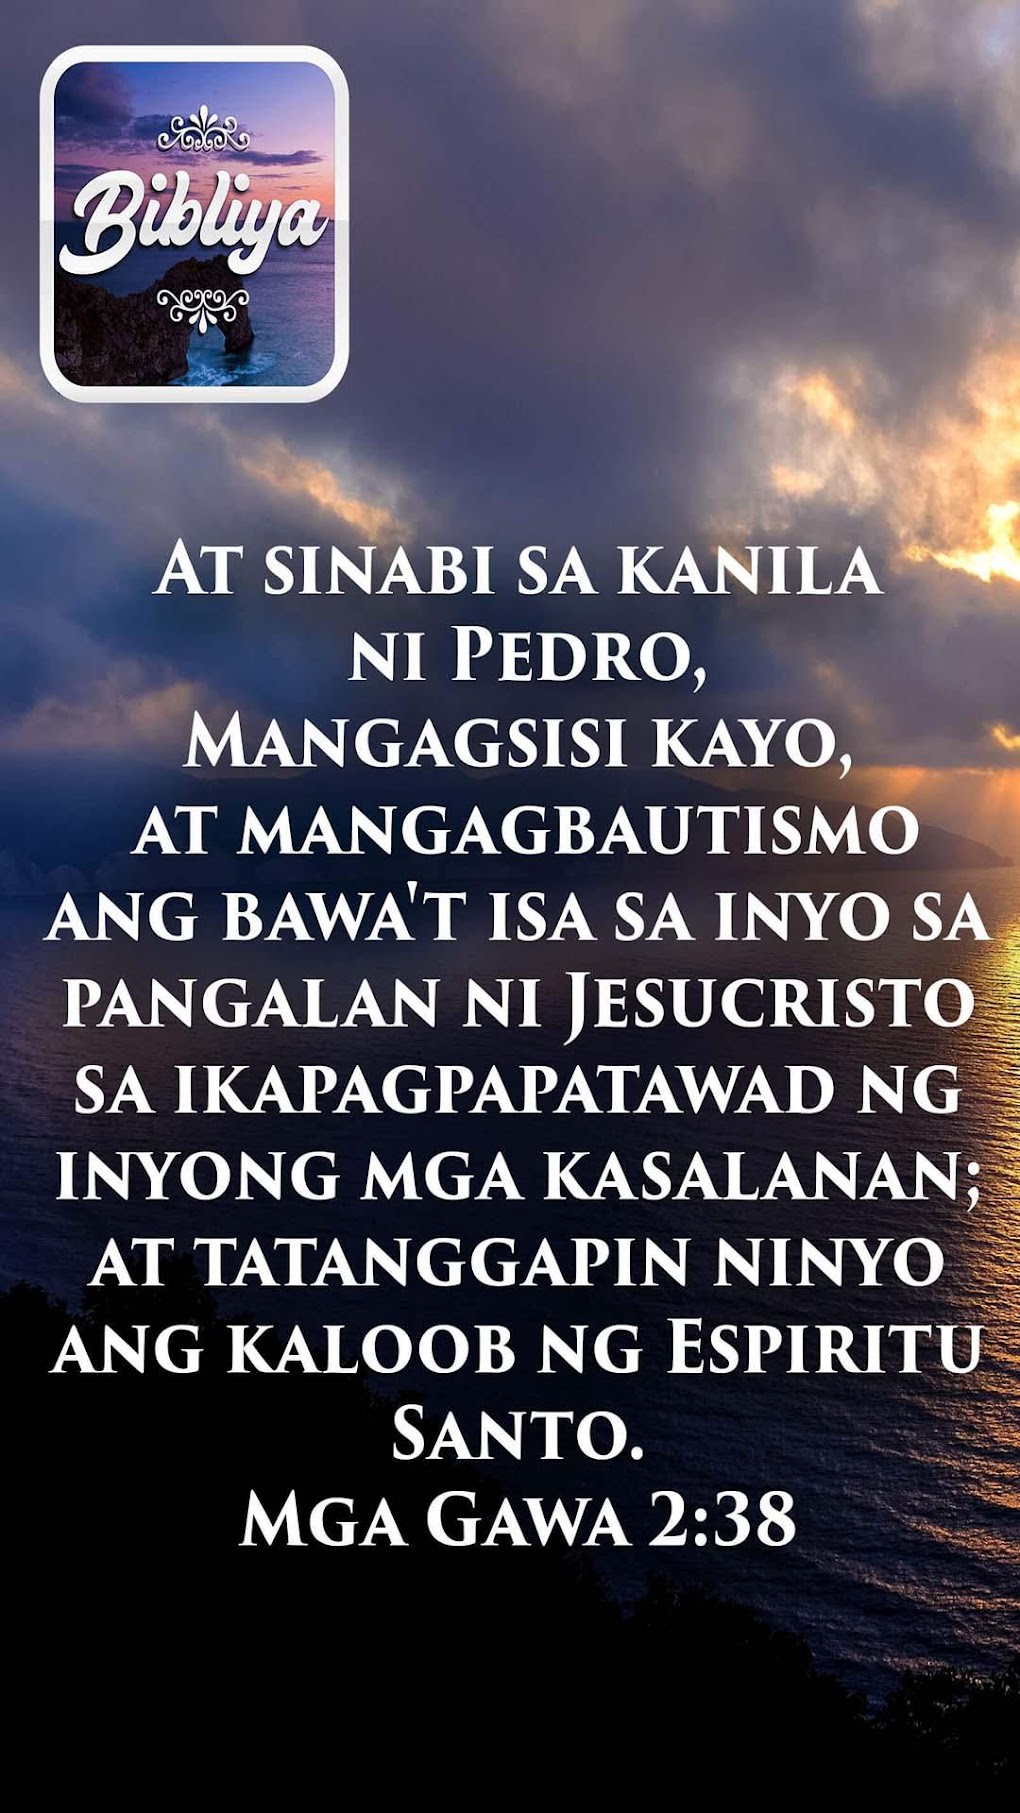 Bible in Tagalog para Android - Download